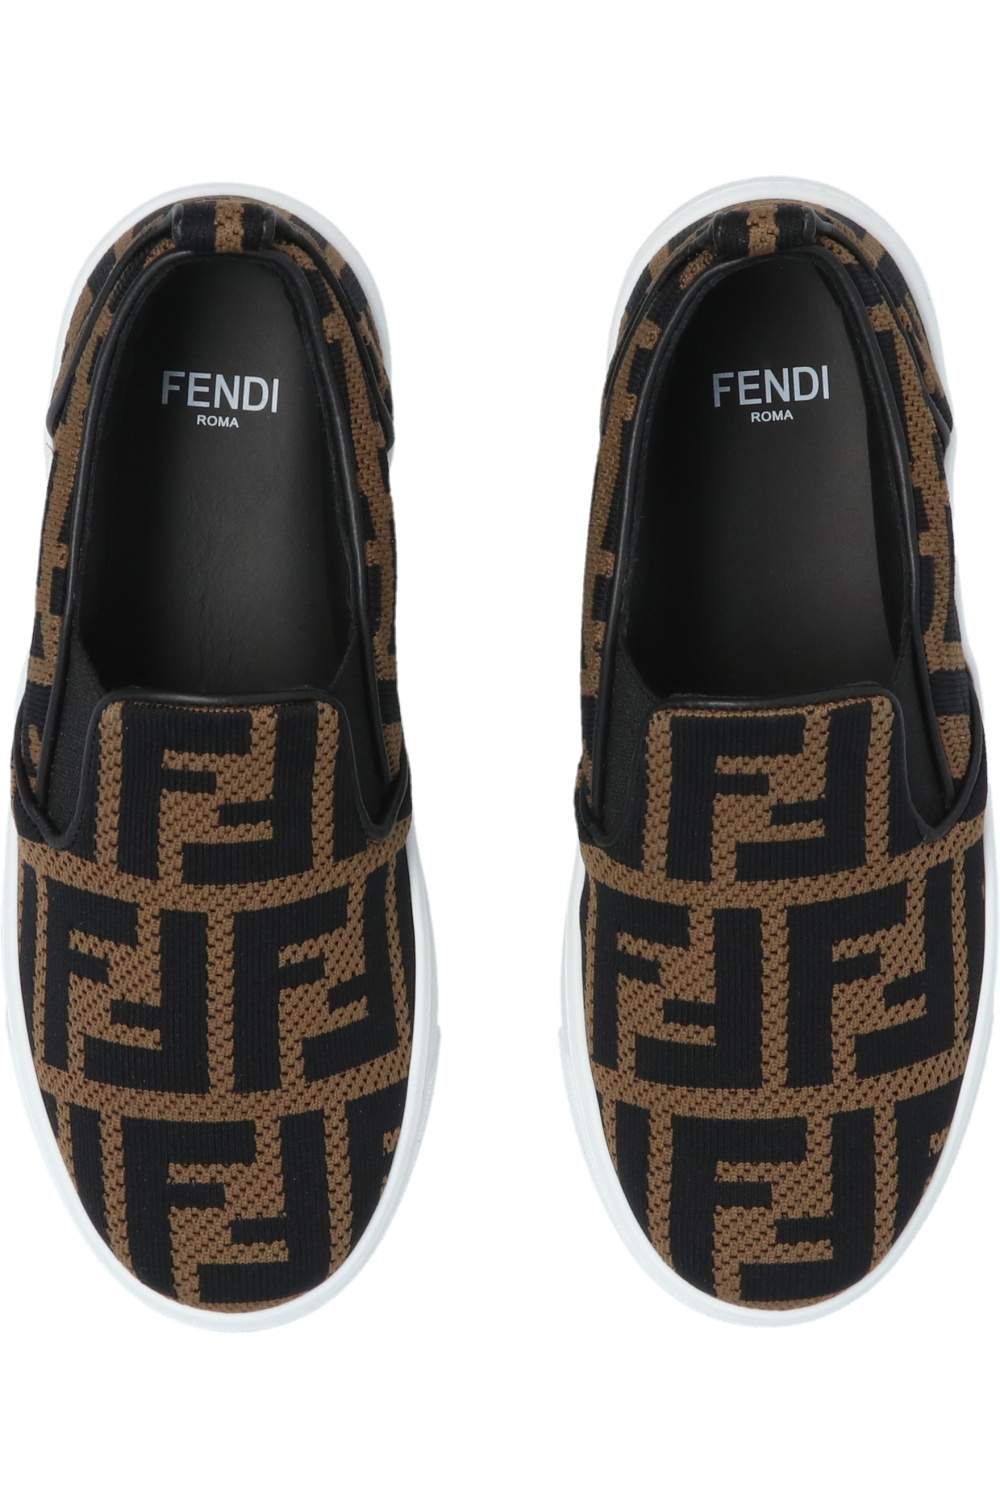 Fendi Kids Slip-on shoes